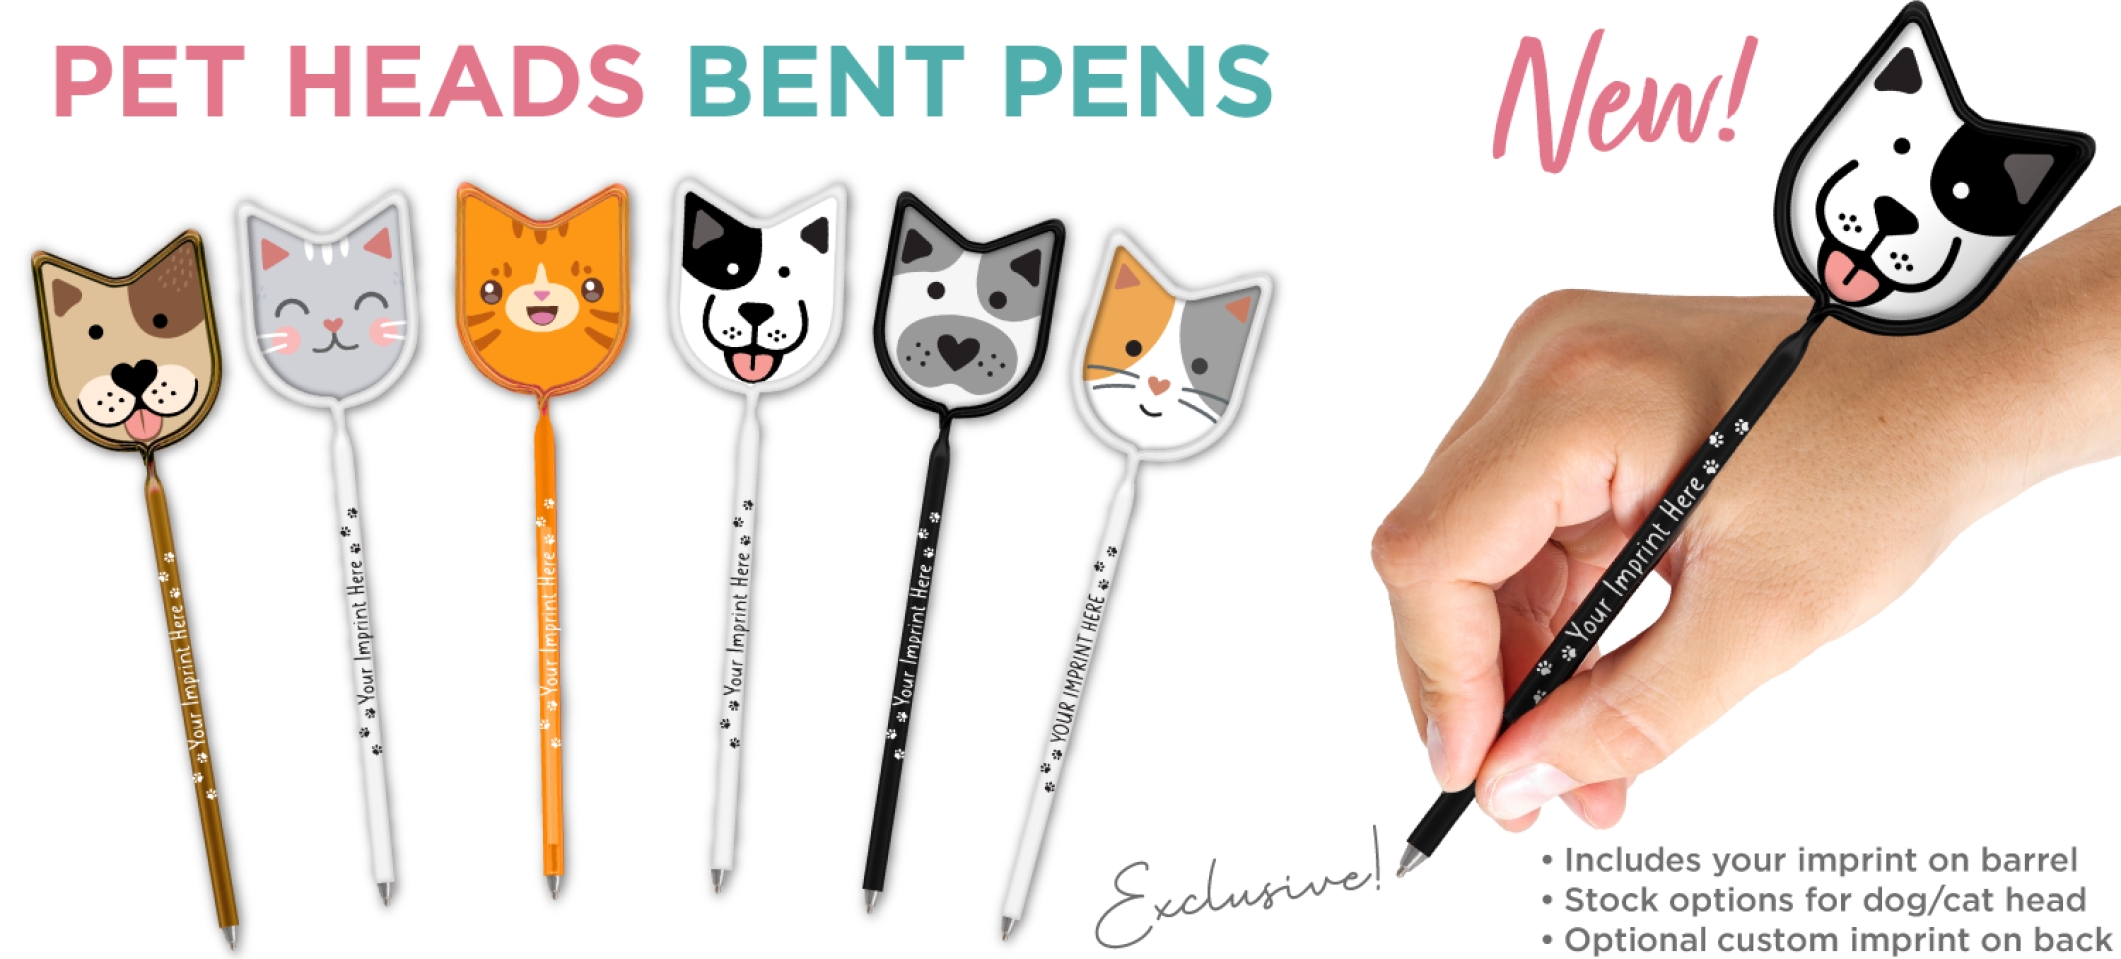 Pet Heads Bent Pens